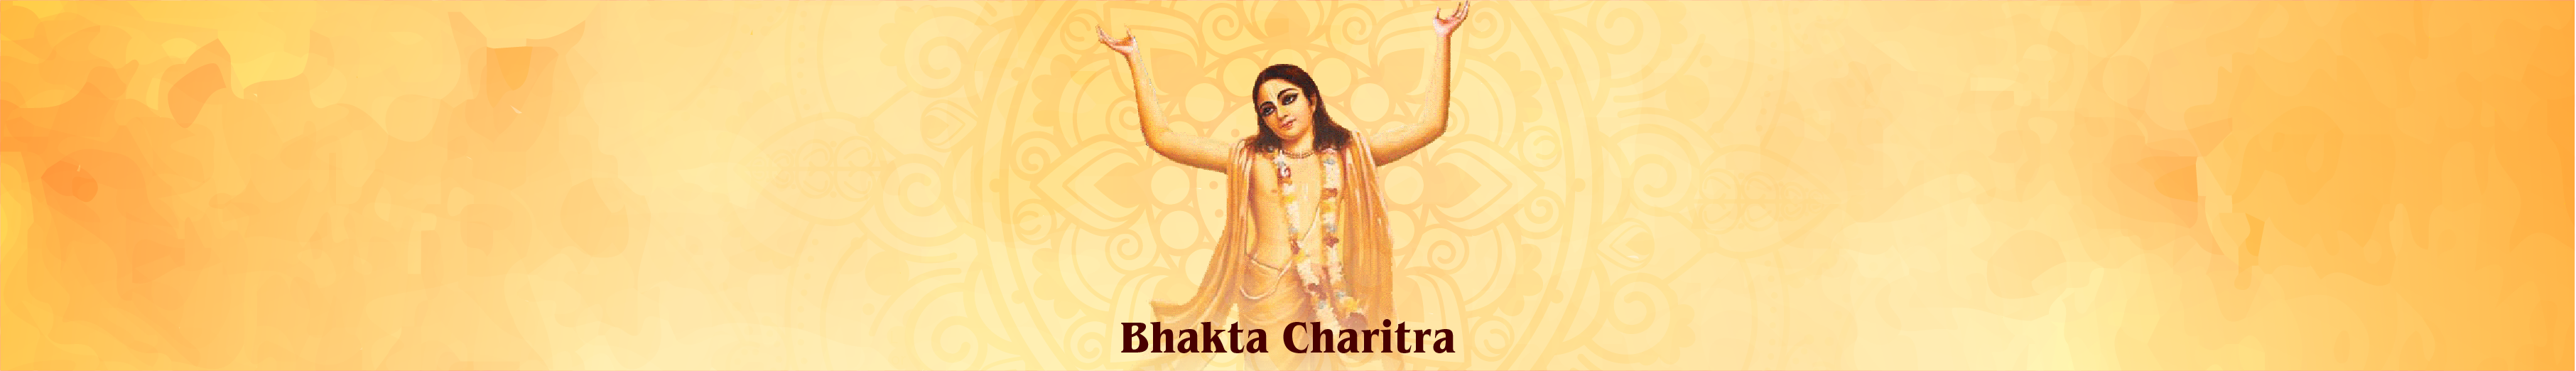 Bhakta Charitra